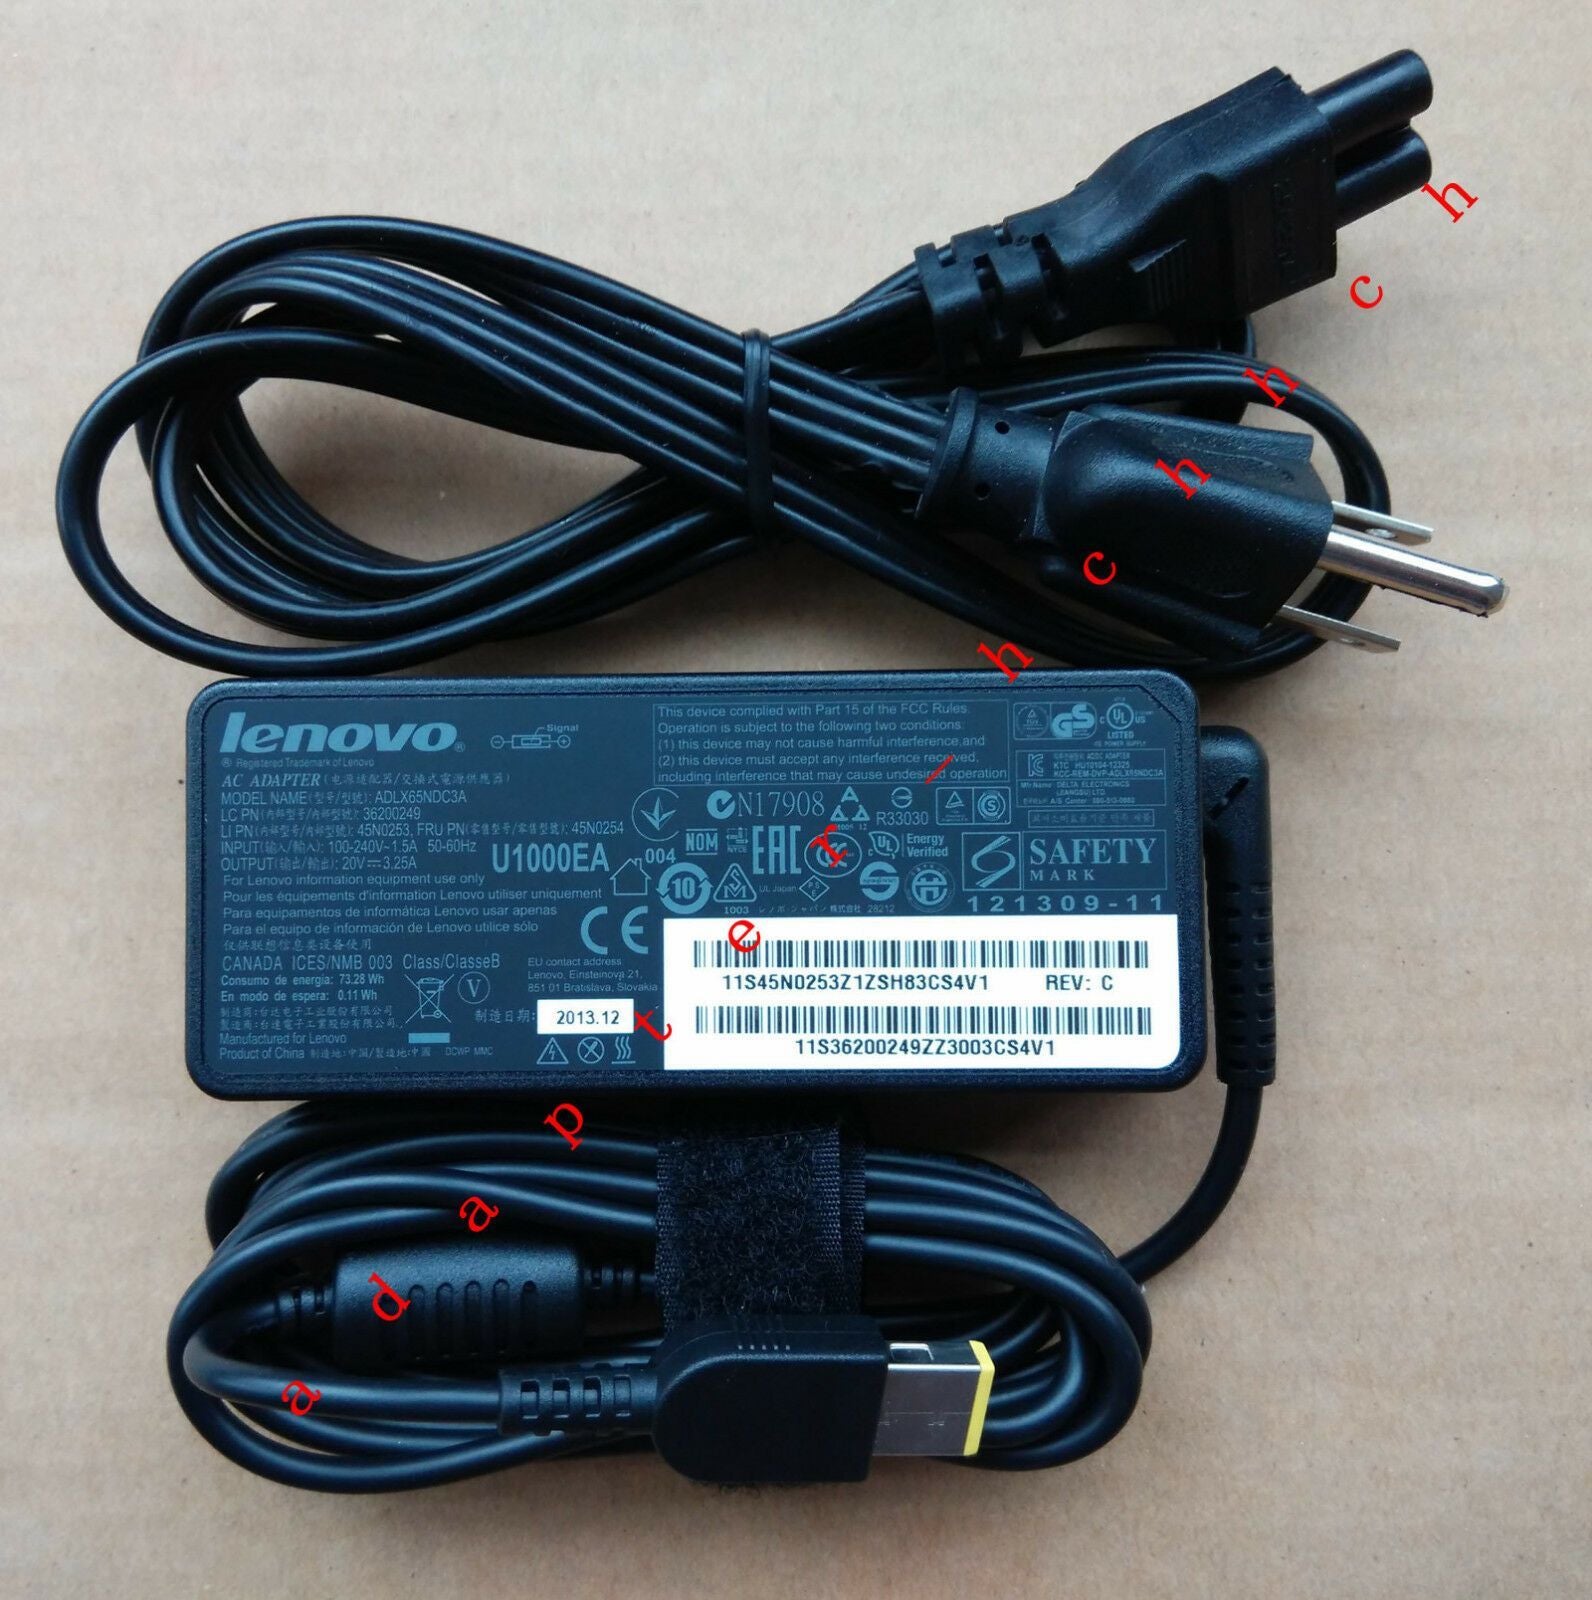 @New Original OEM 65W AC Adapter for Lenovo ThinkPad S3-S431 20AX000MUS,36200249